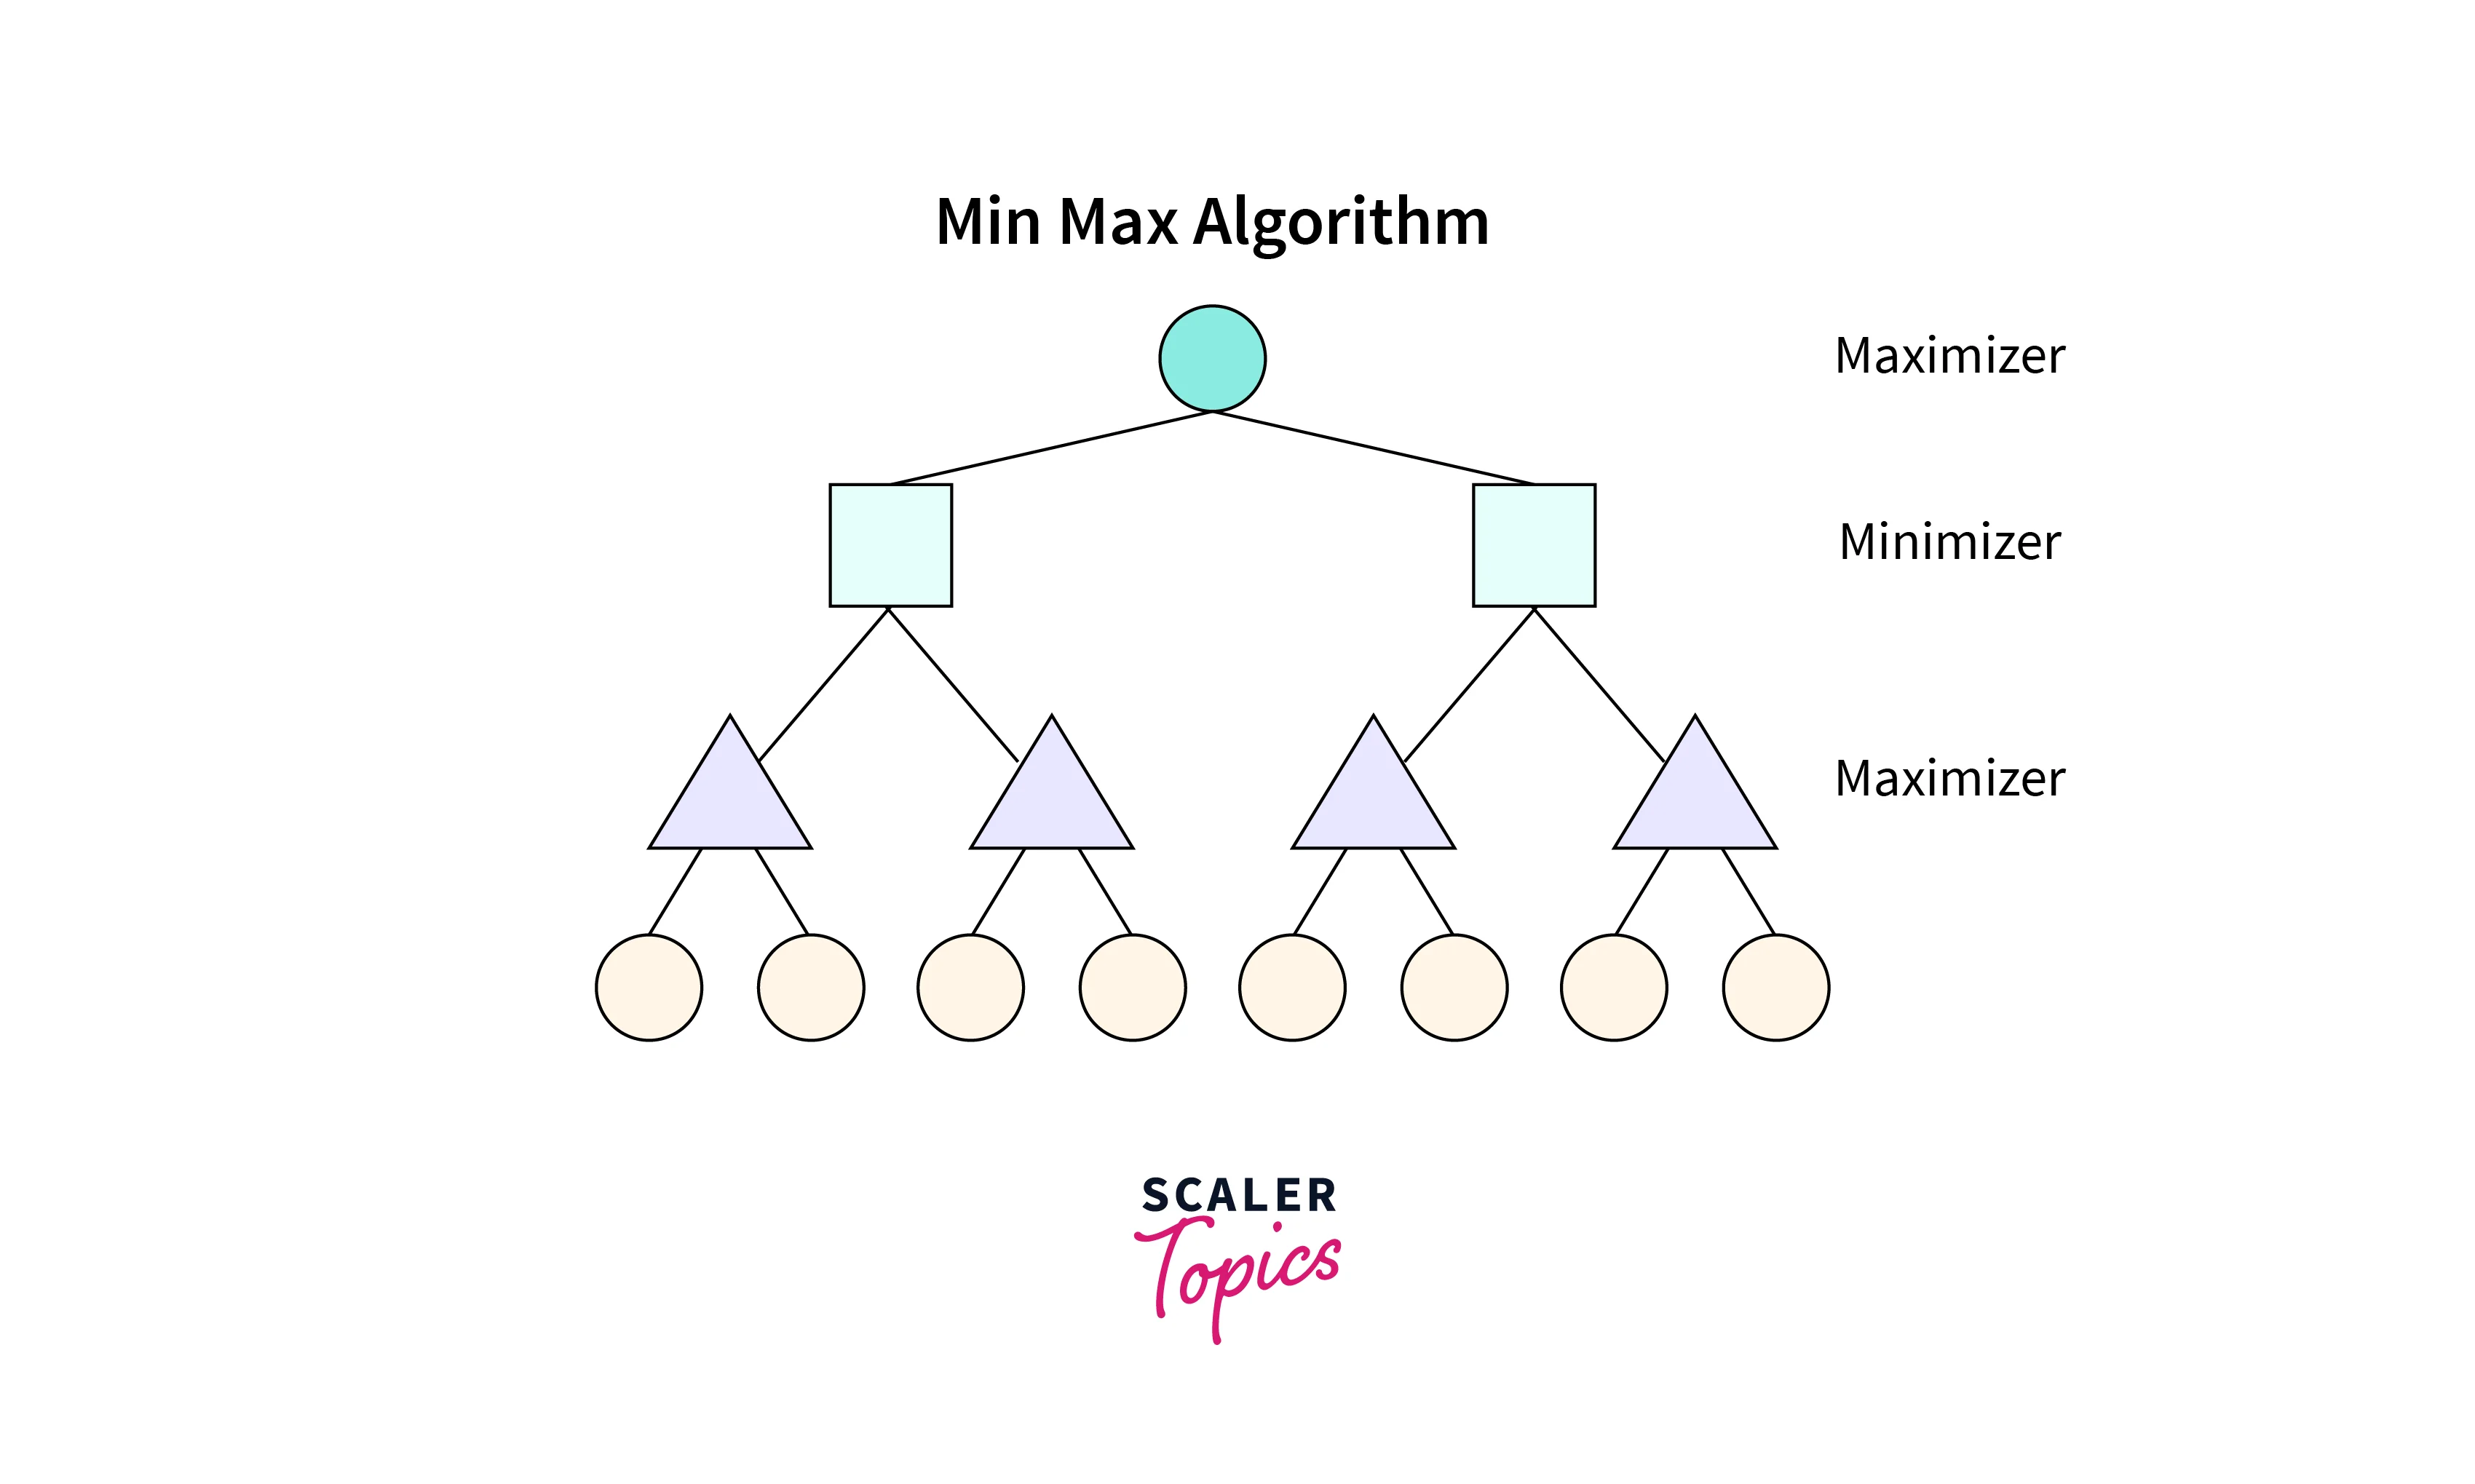 Minimax Algorithm Guide: How to Create an Unbeatable AI